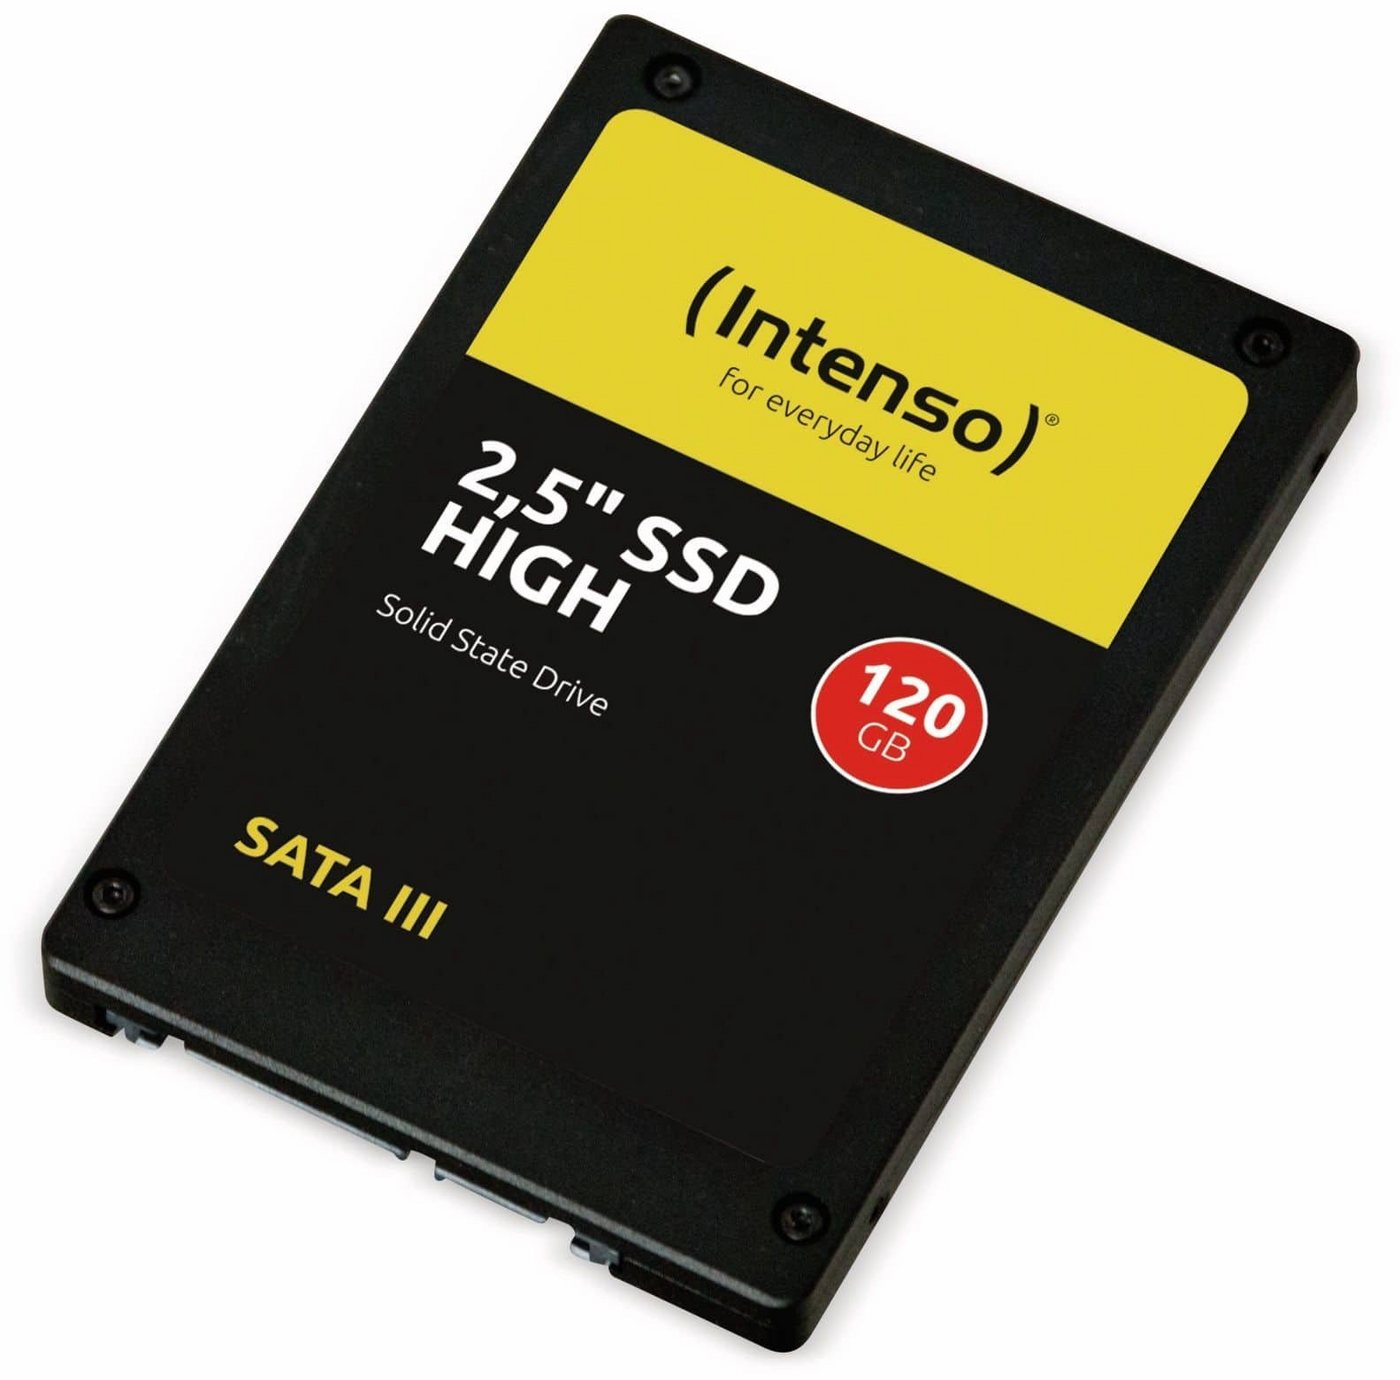 Intenso INTENSO SSD High Performance 3813430, SATA III interne SSD von Intenso